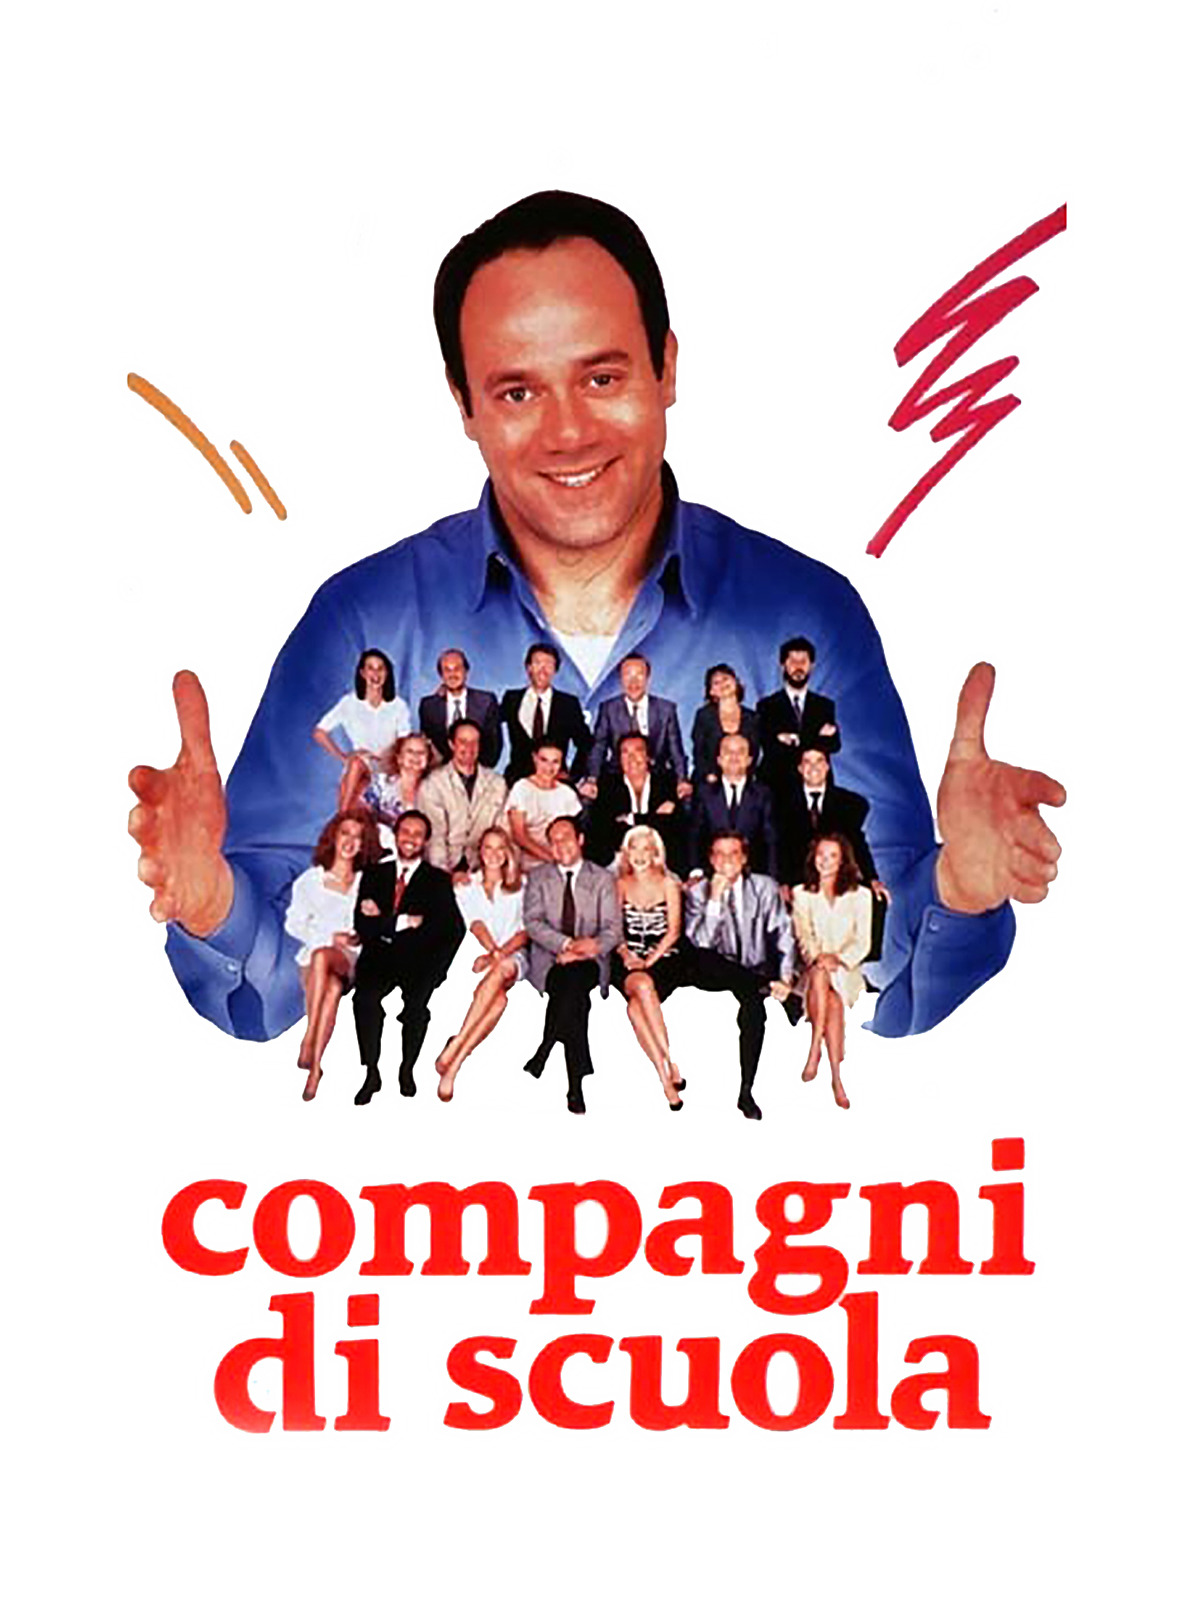 Compagni di scuola (1988) with English Subtitles on DVD on DVD